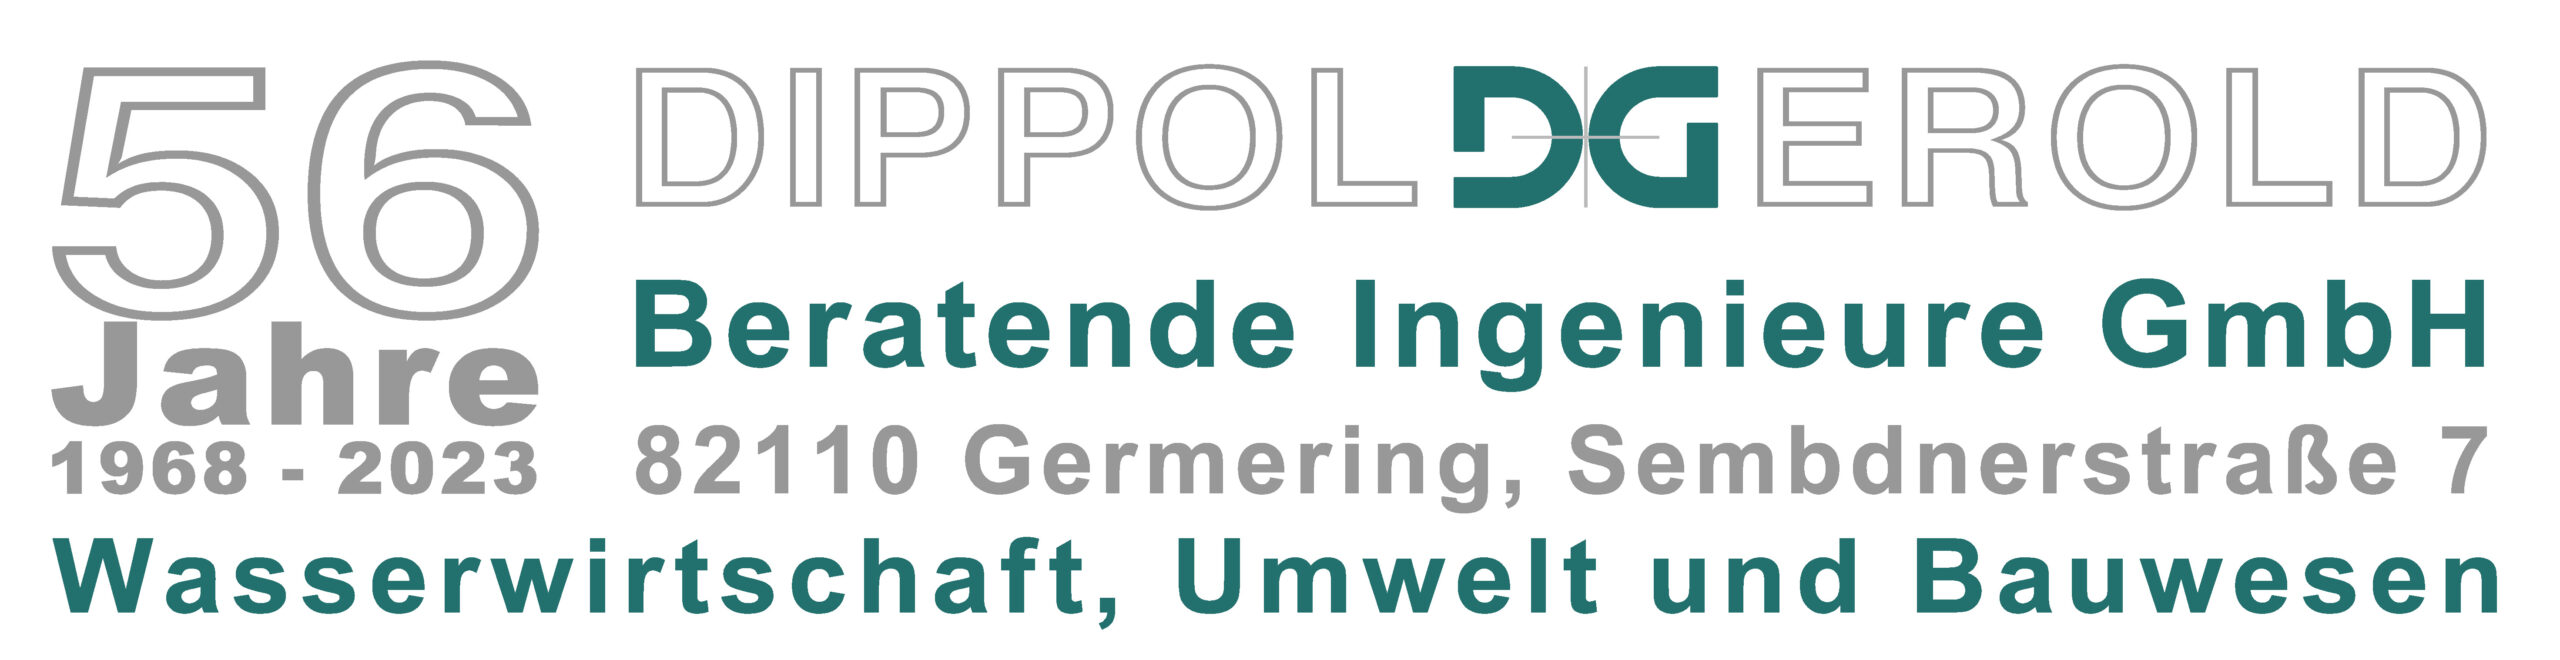 Beratende Ingenieure Dippold & Gerold GmbH